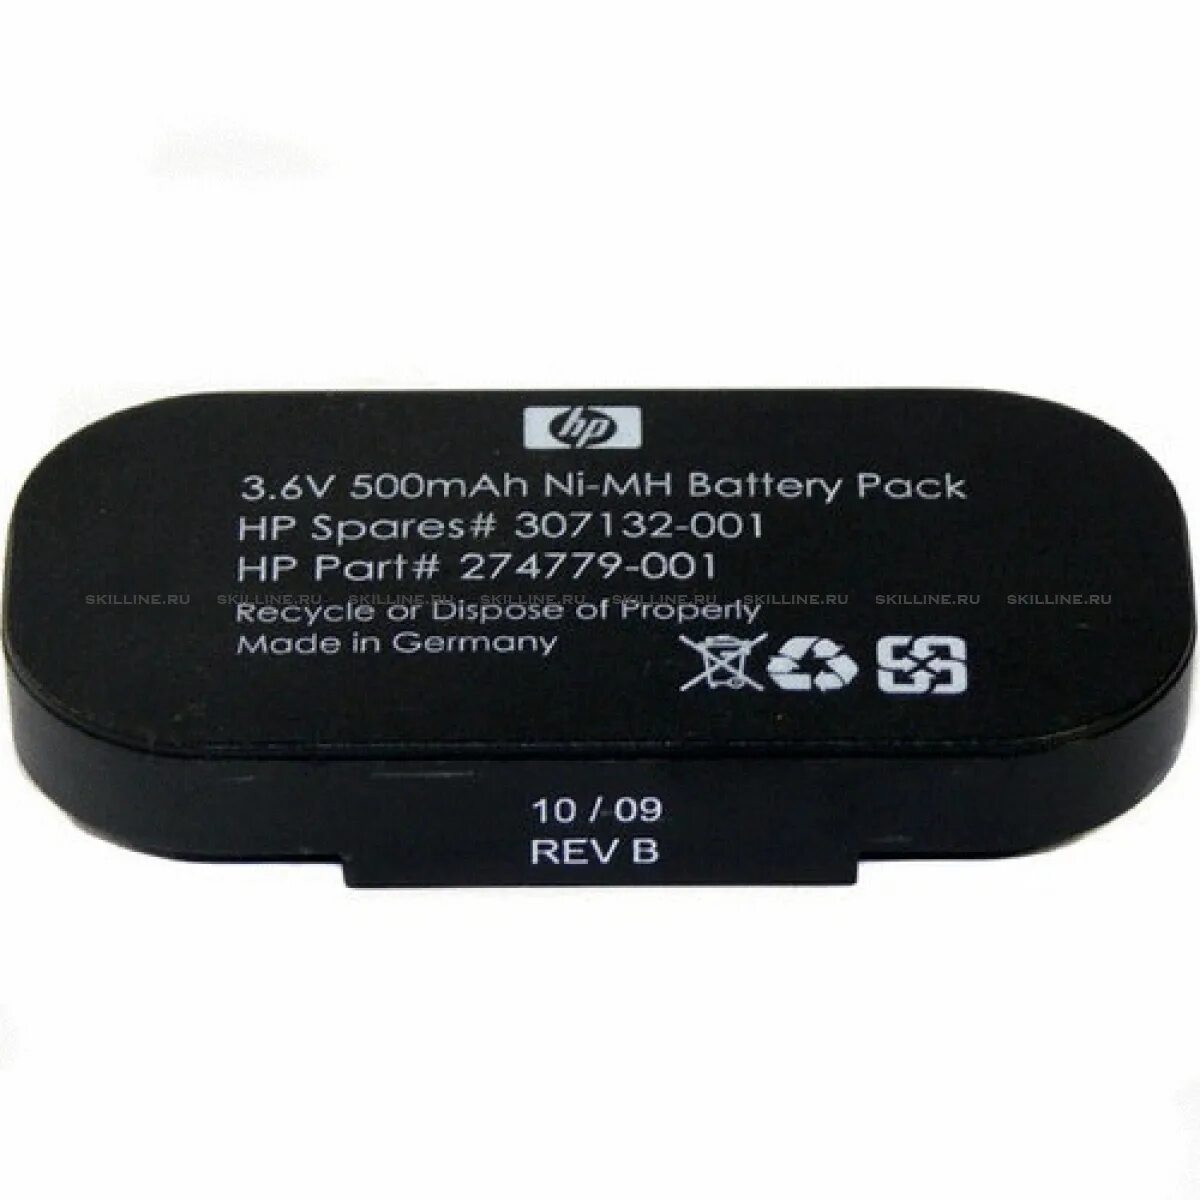 Battery pack 6. DL 380 6v аккумулятор. Battery Pack оригинал.